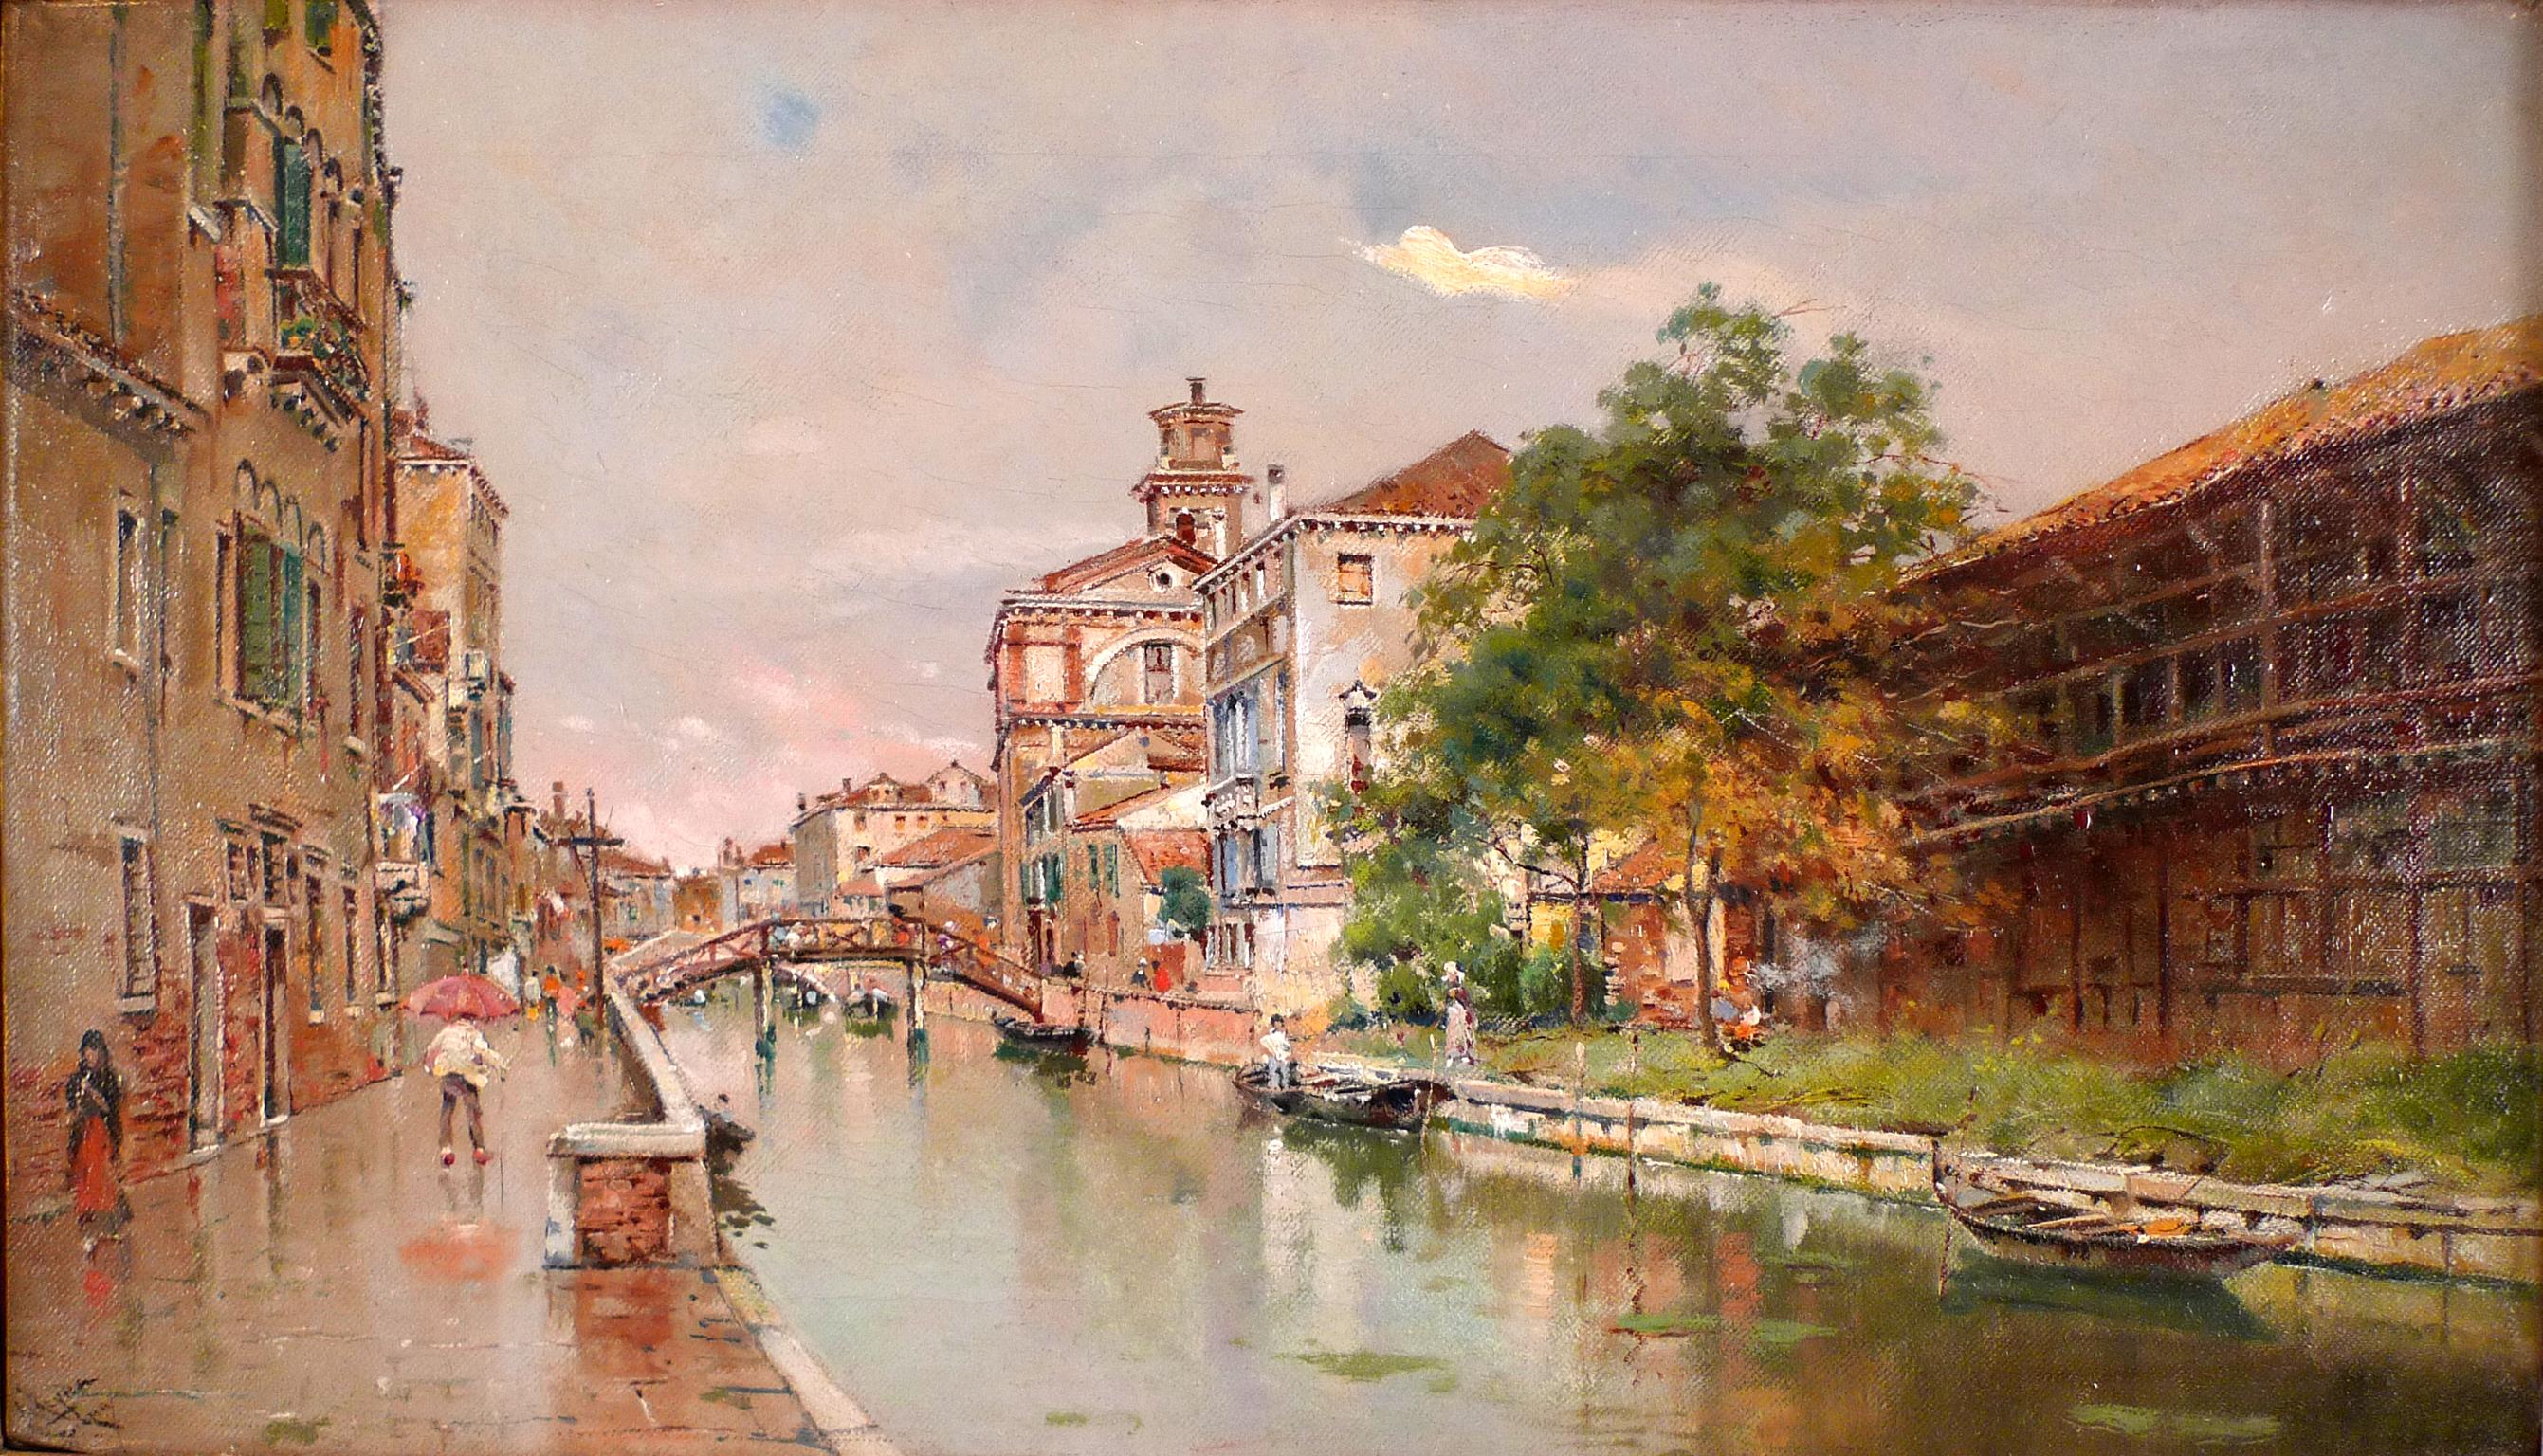 Antonio Reyna Manescau Landscape Painting - "Venetian Canal" Late 19th Century Oil on Canvas by Spanish Artist Antonio Reyna